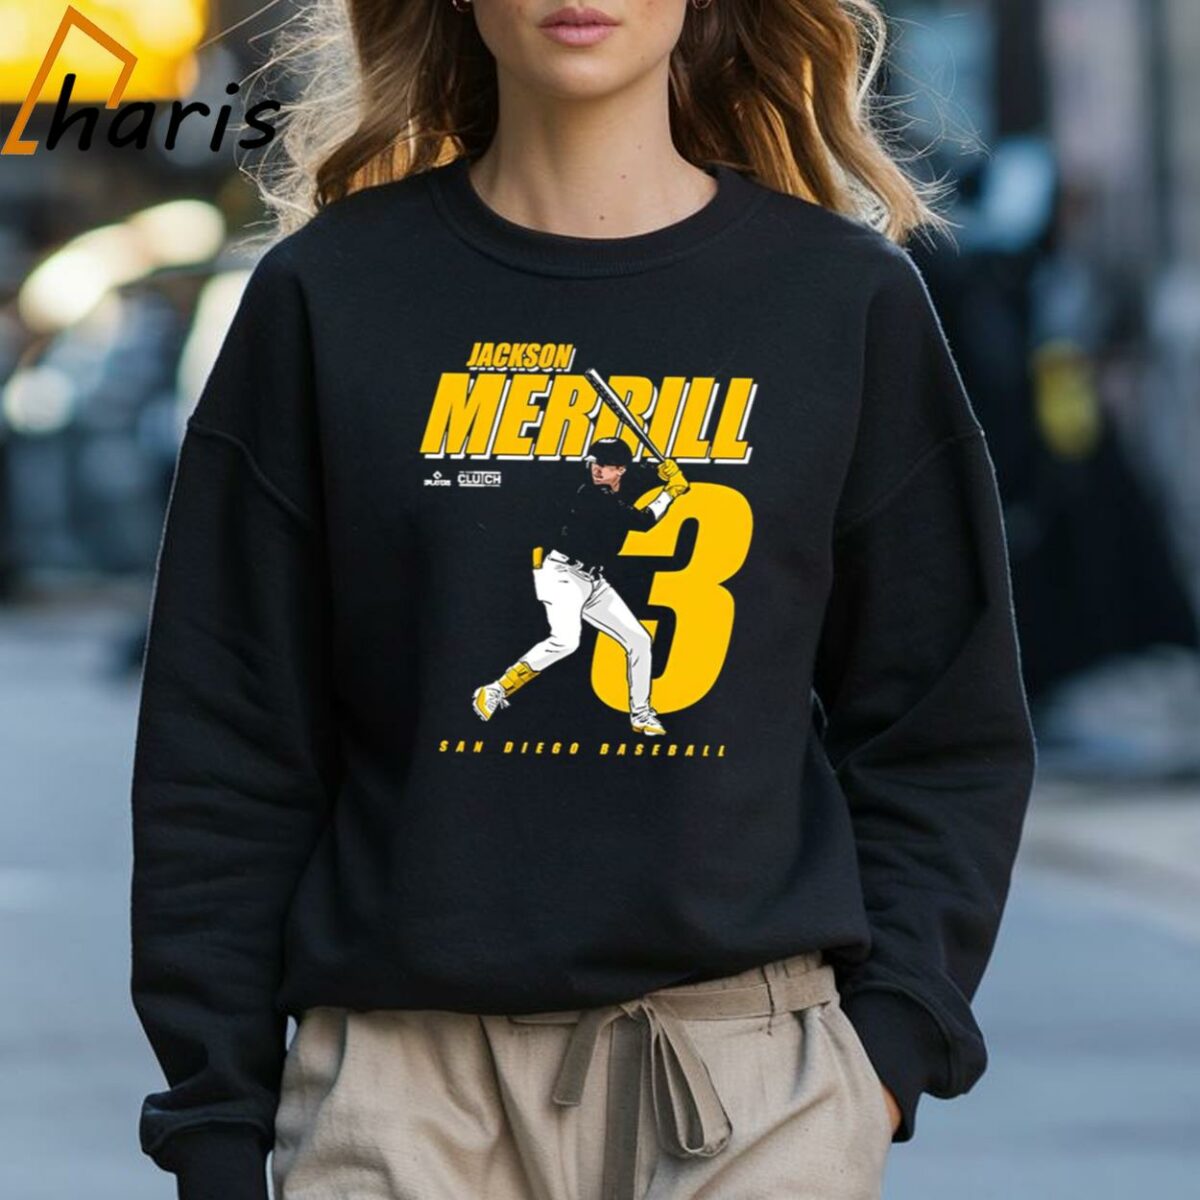 Jackson Merrill 3 Player San Diego Baseball T shirt 3 Sweatshirt